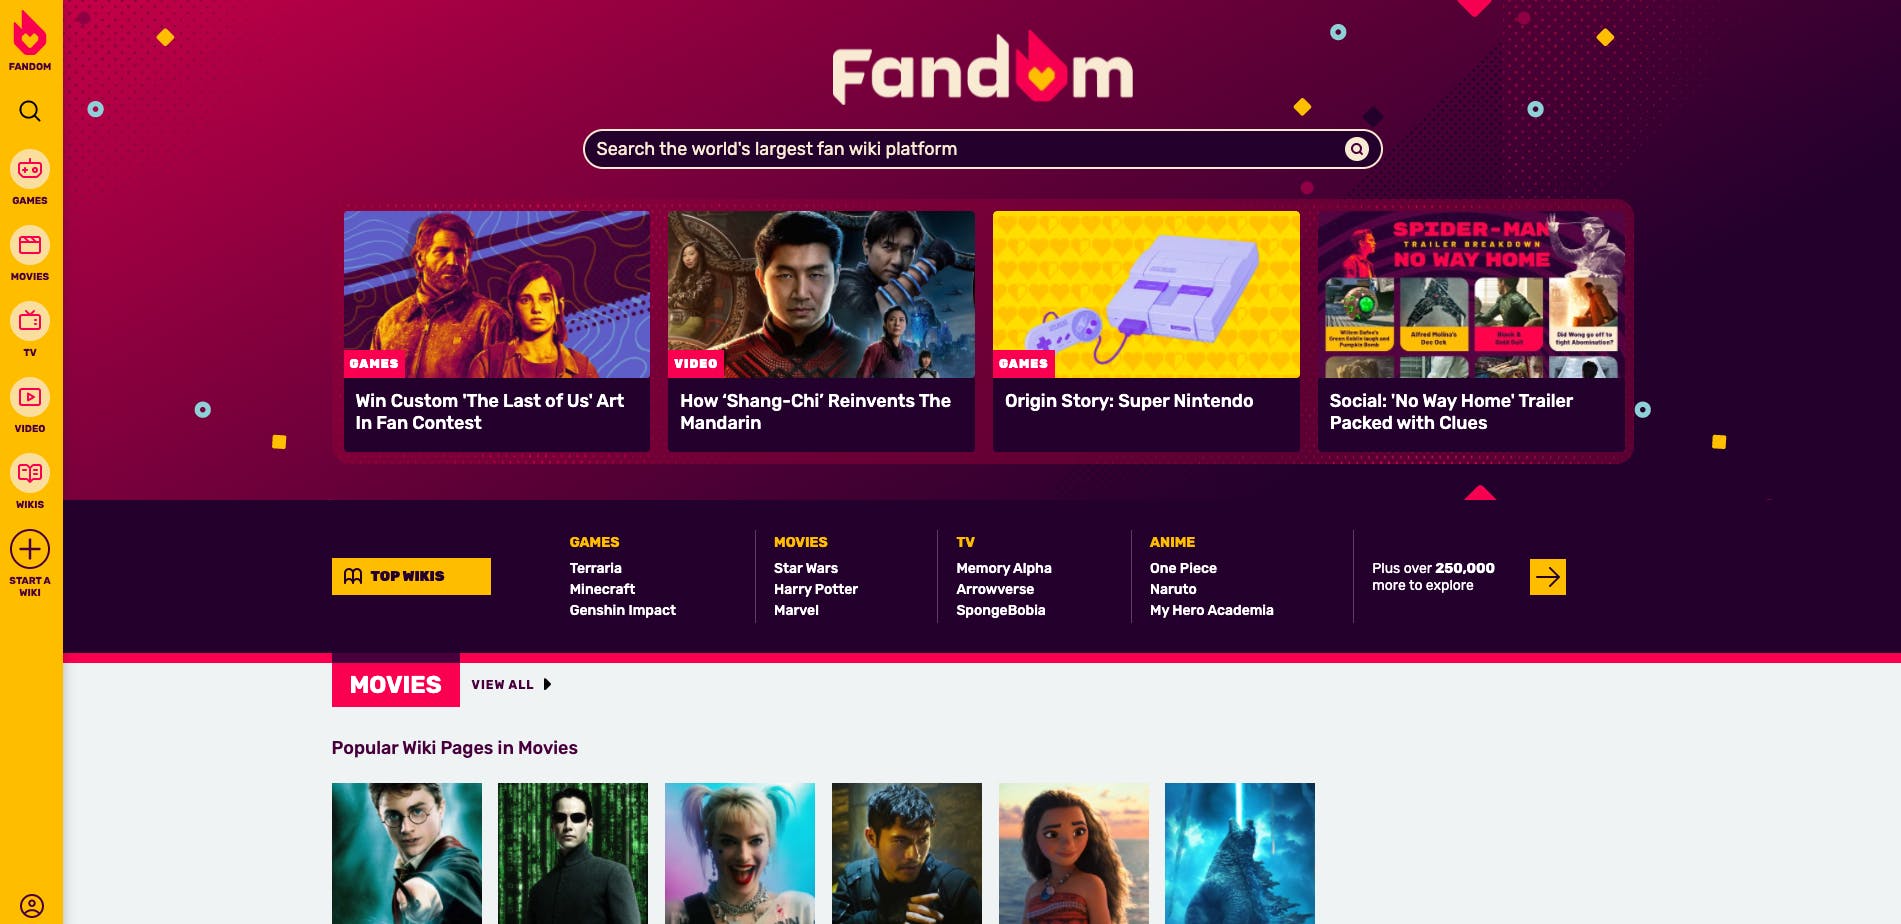 Fandom's new homepage